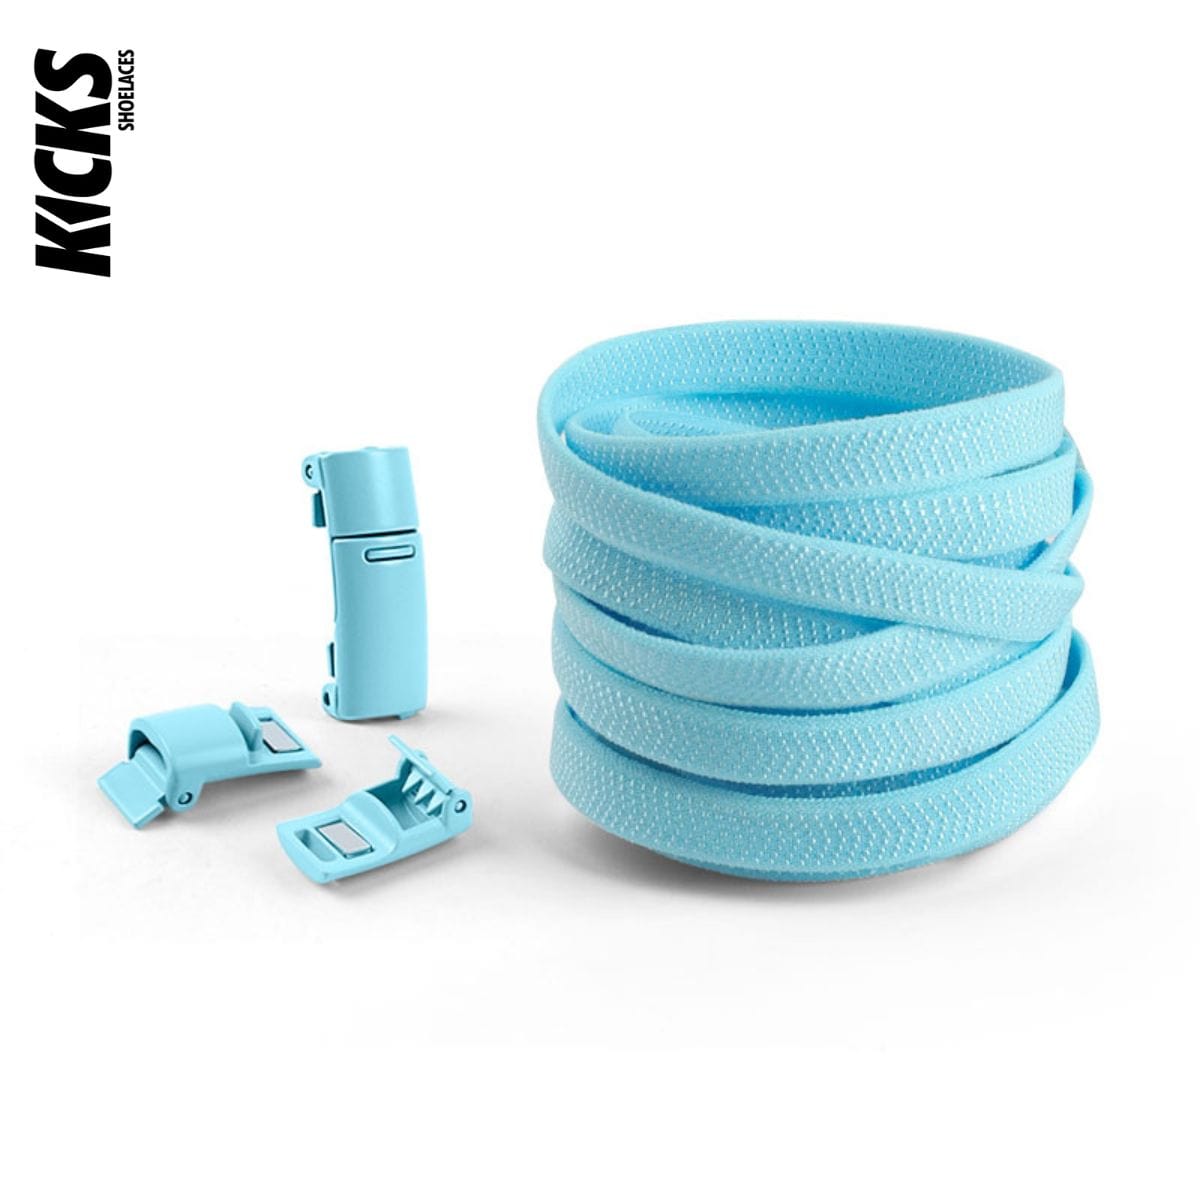 Sky Blue No-Tie Shoelaces with Magnetic Locks - Kicks Shoelaces